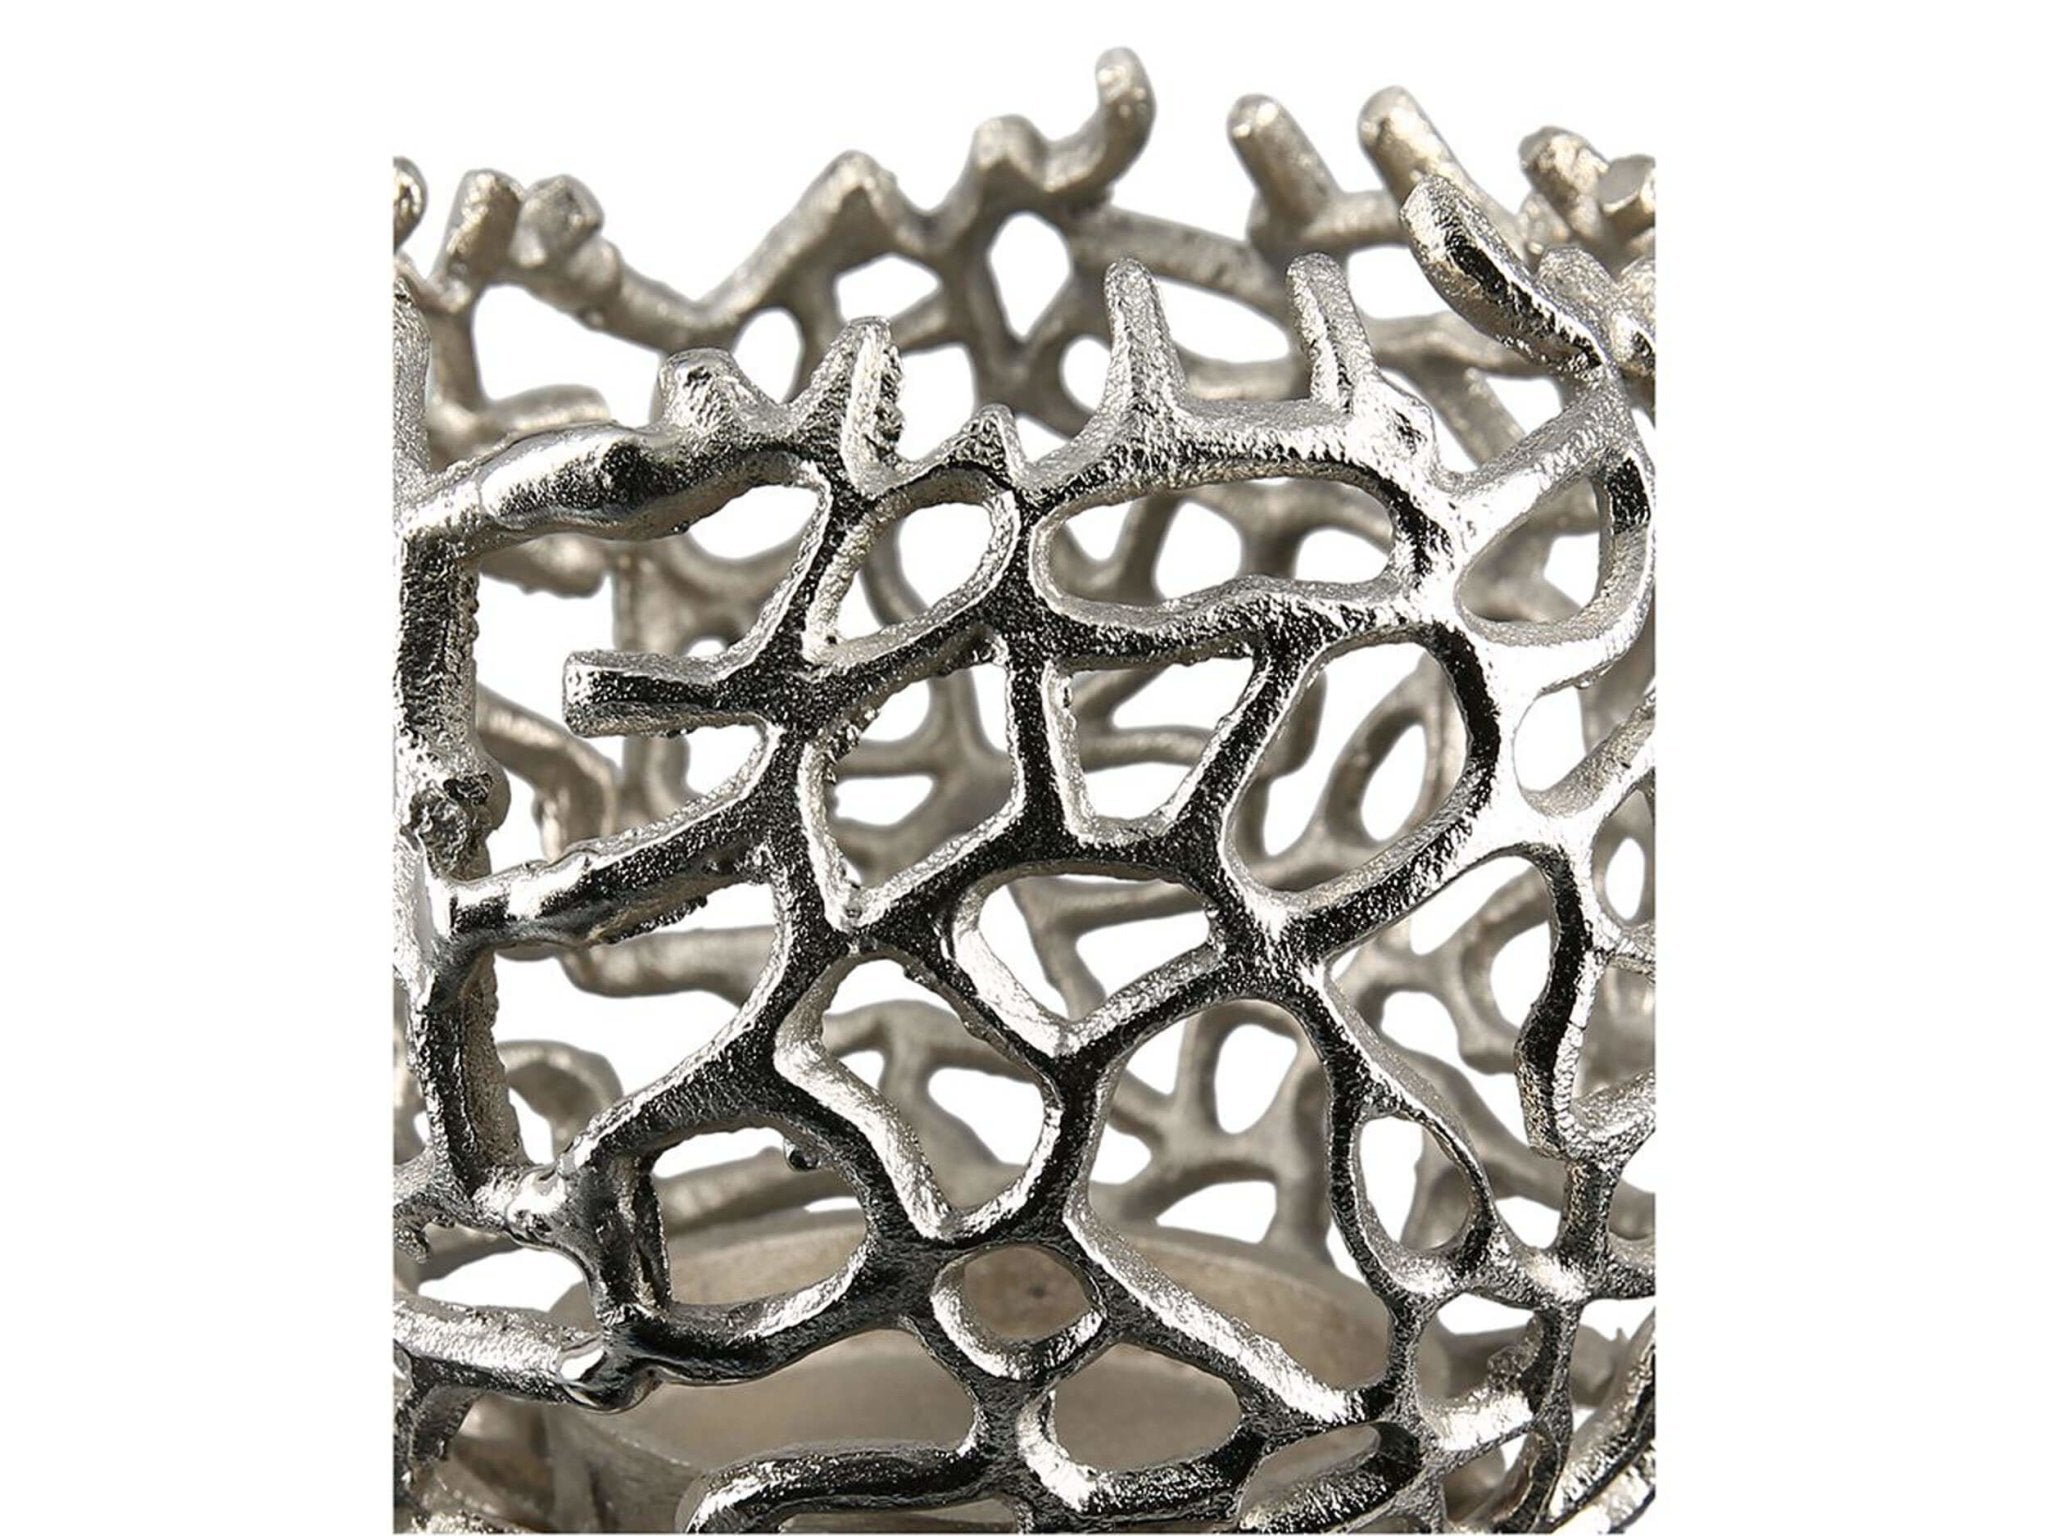 Takvormige kandelaar in zilver aluminium | Twigs